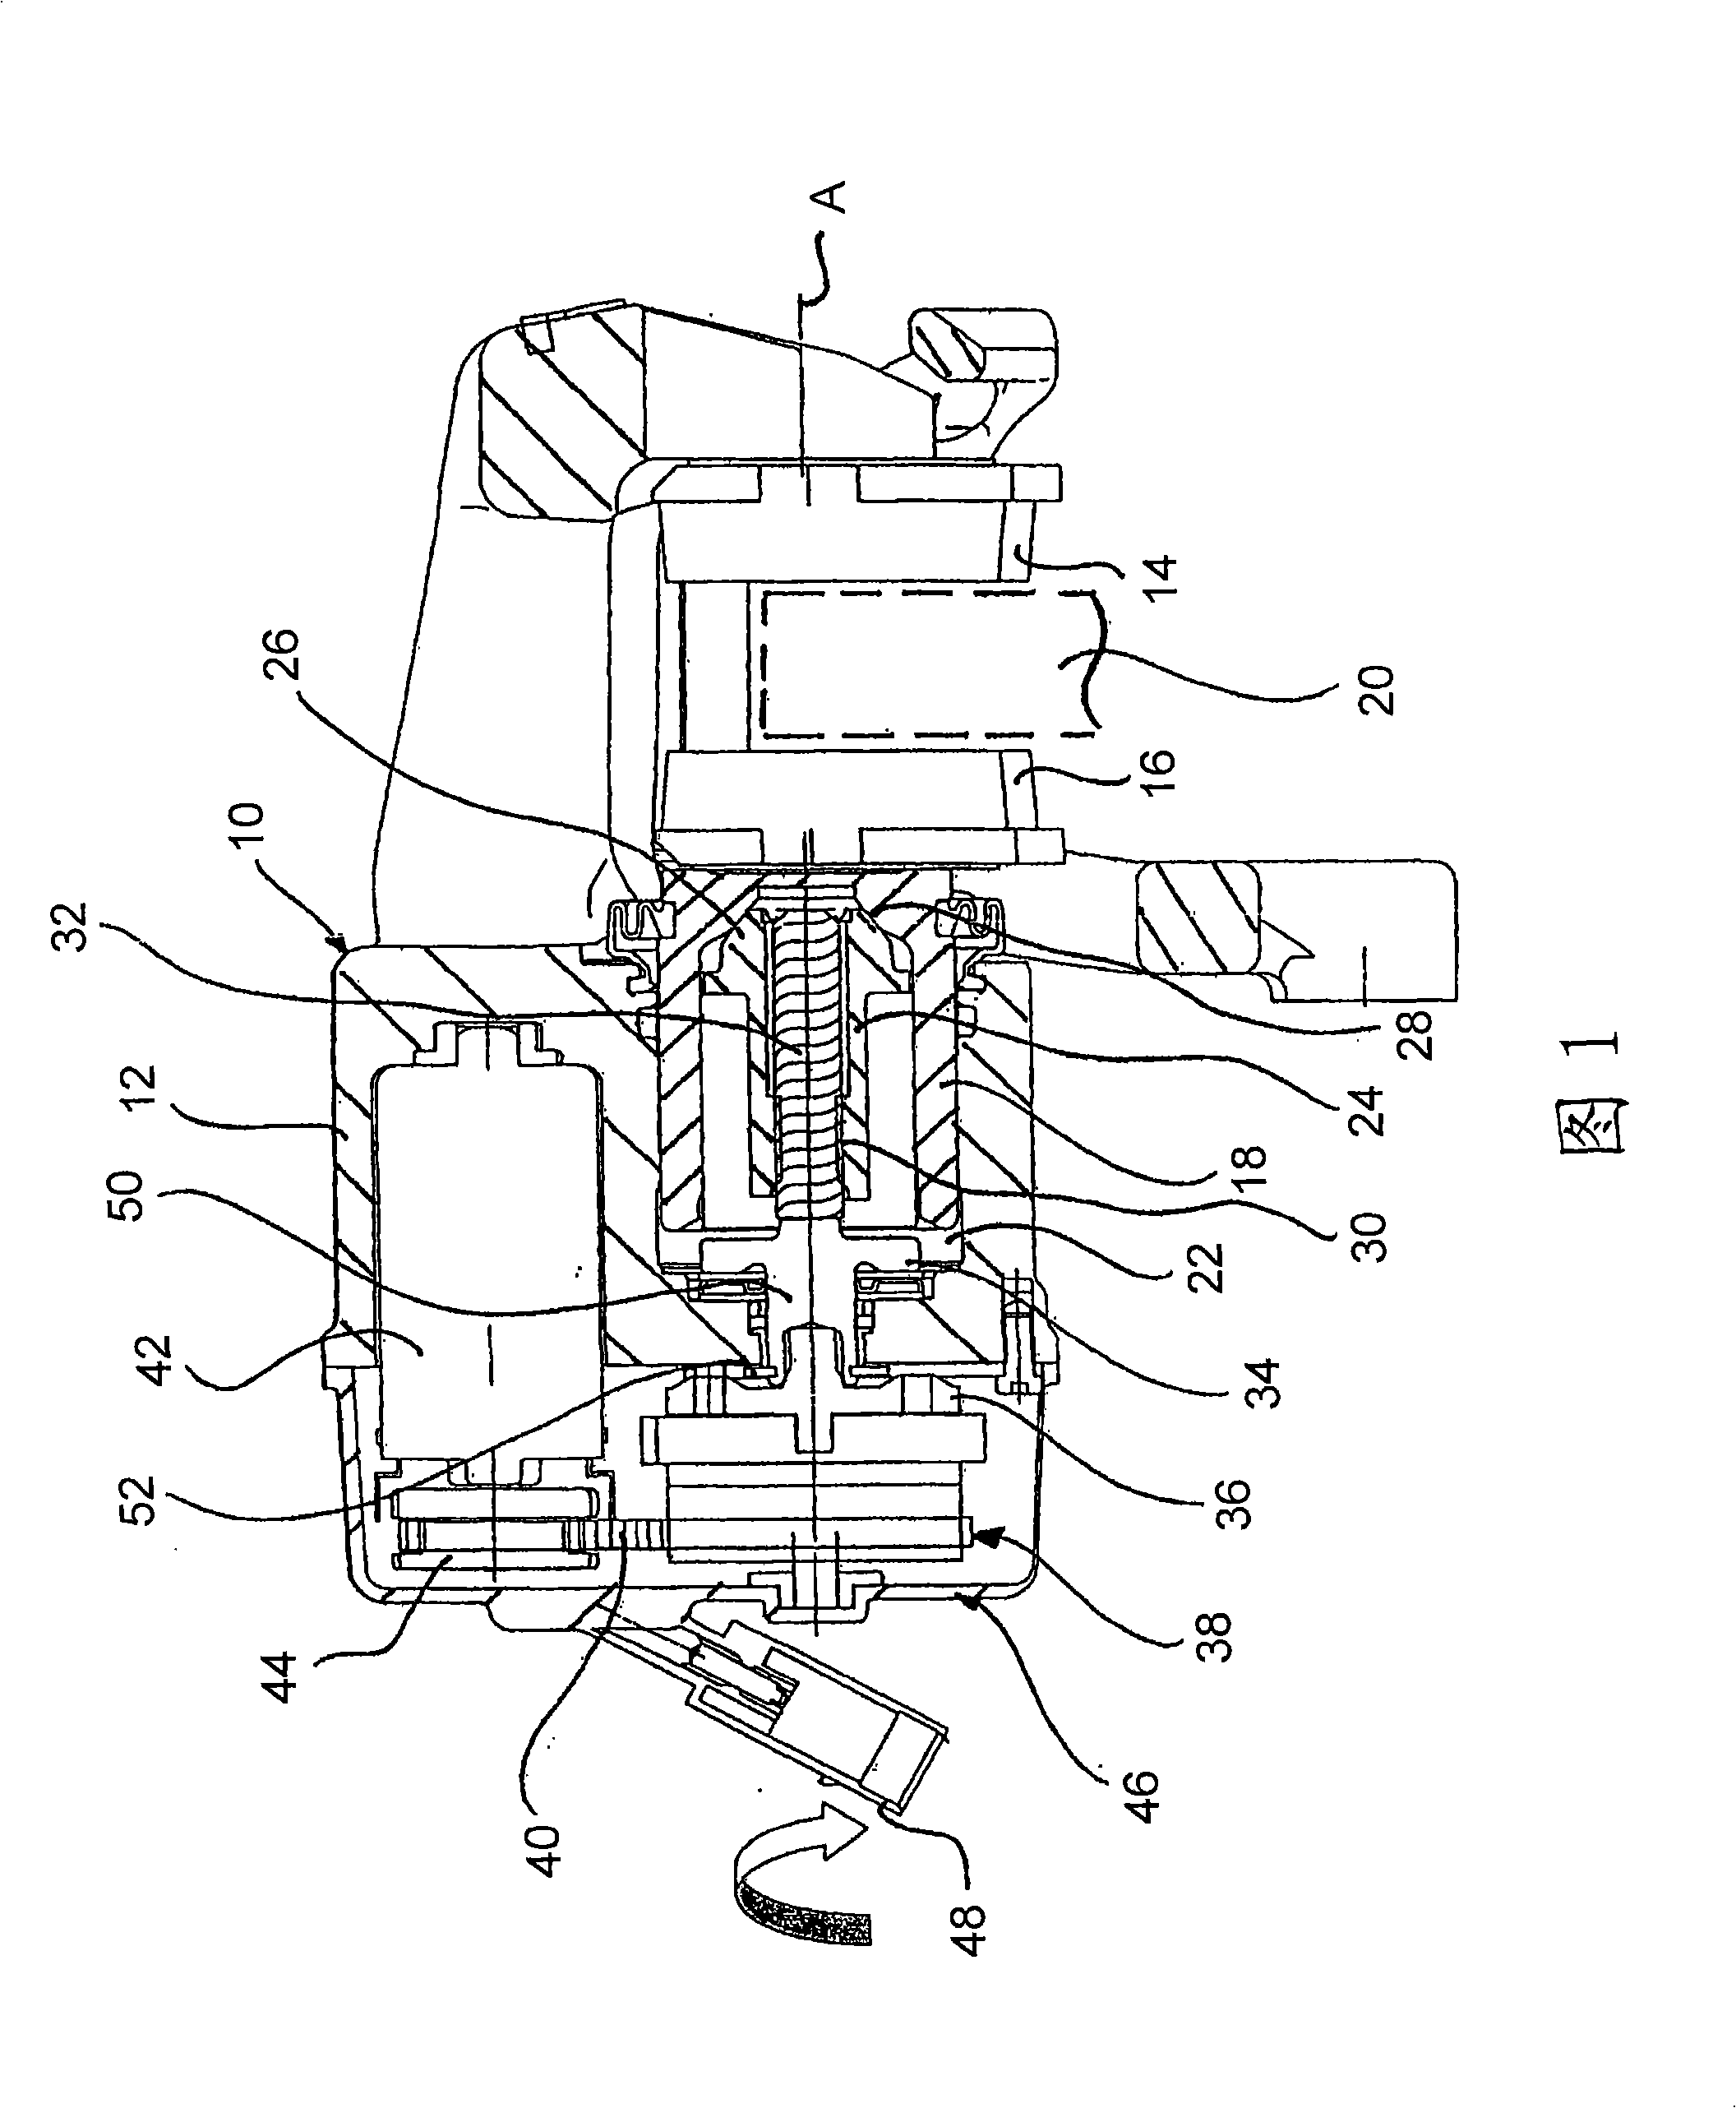 Vehicle brake, in particular caliper brake